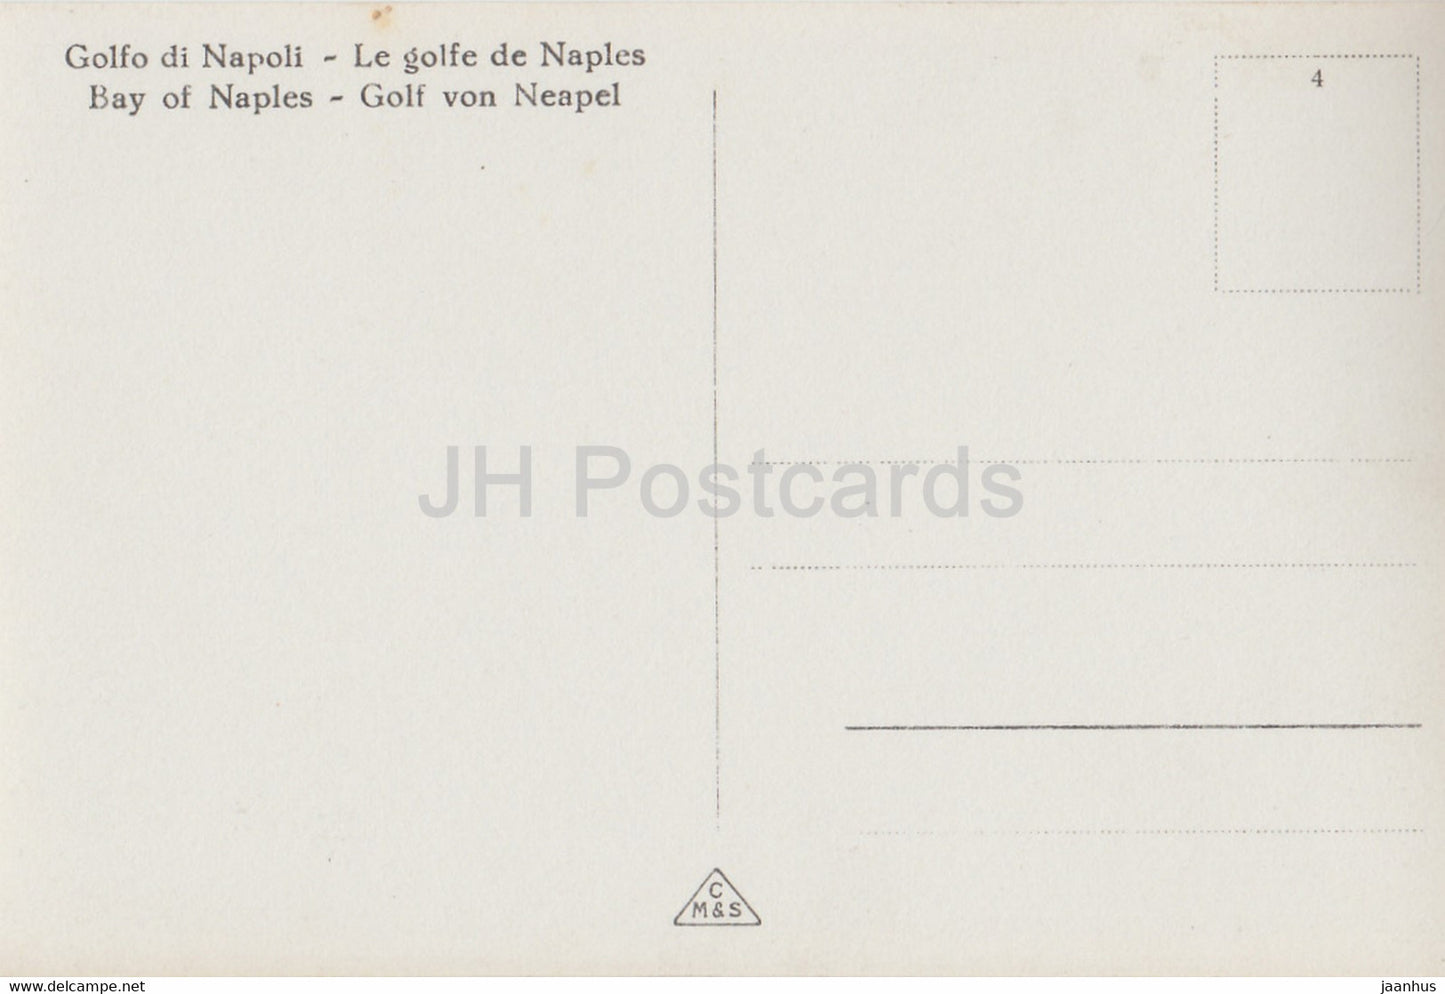 Golfo fi Napoli - Bay of Naples - 698 - old postcard - Italy - unused